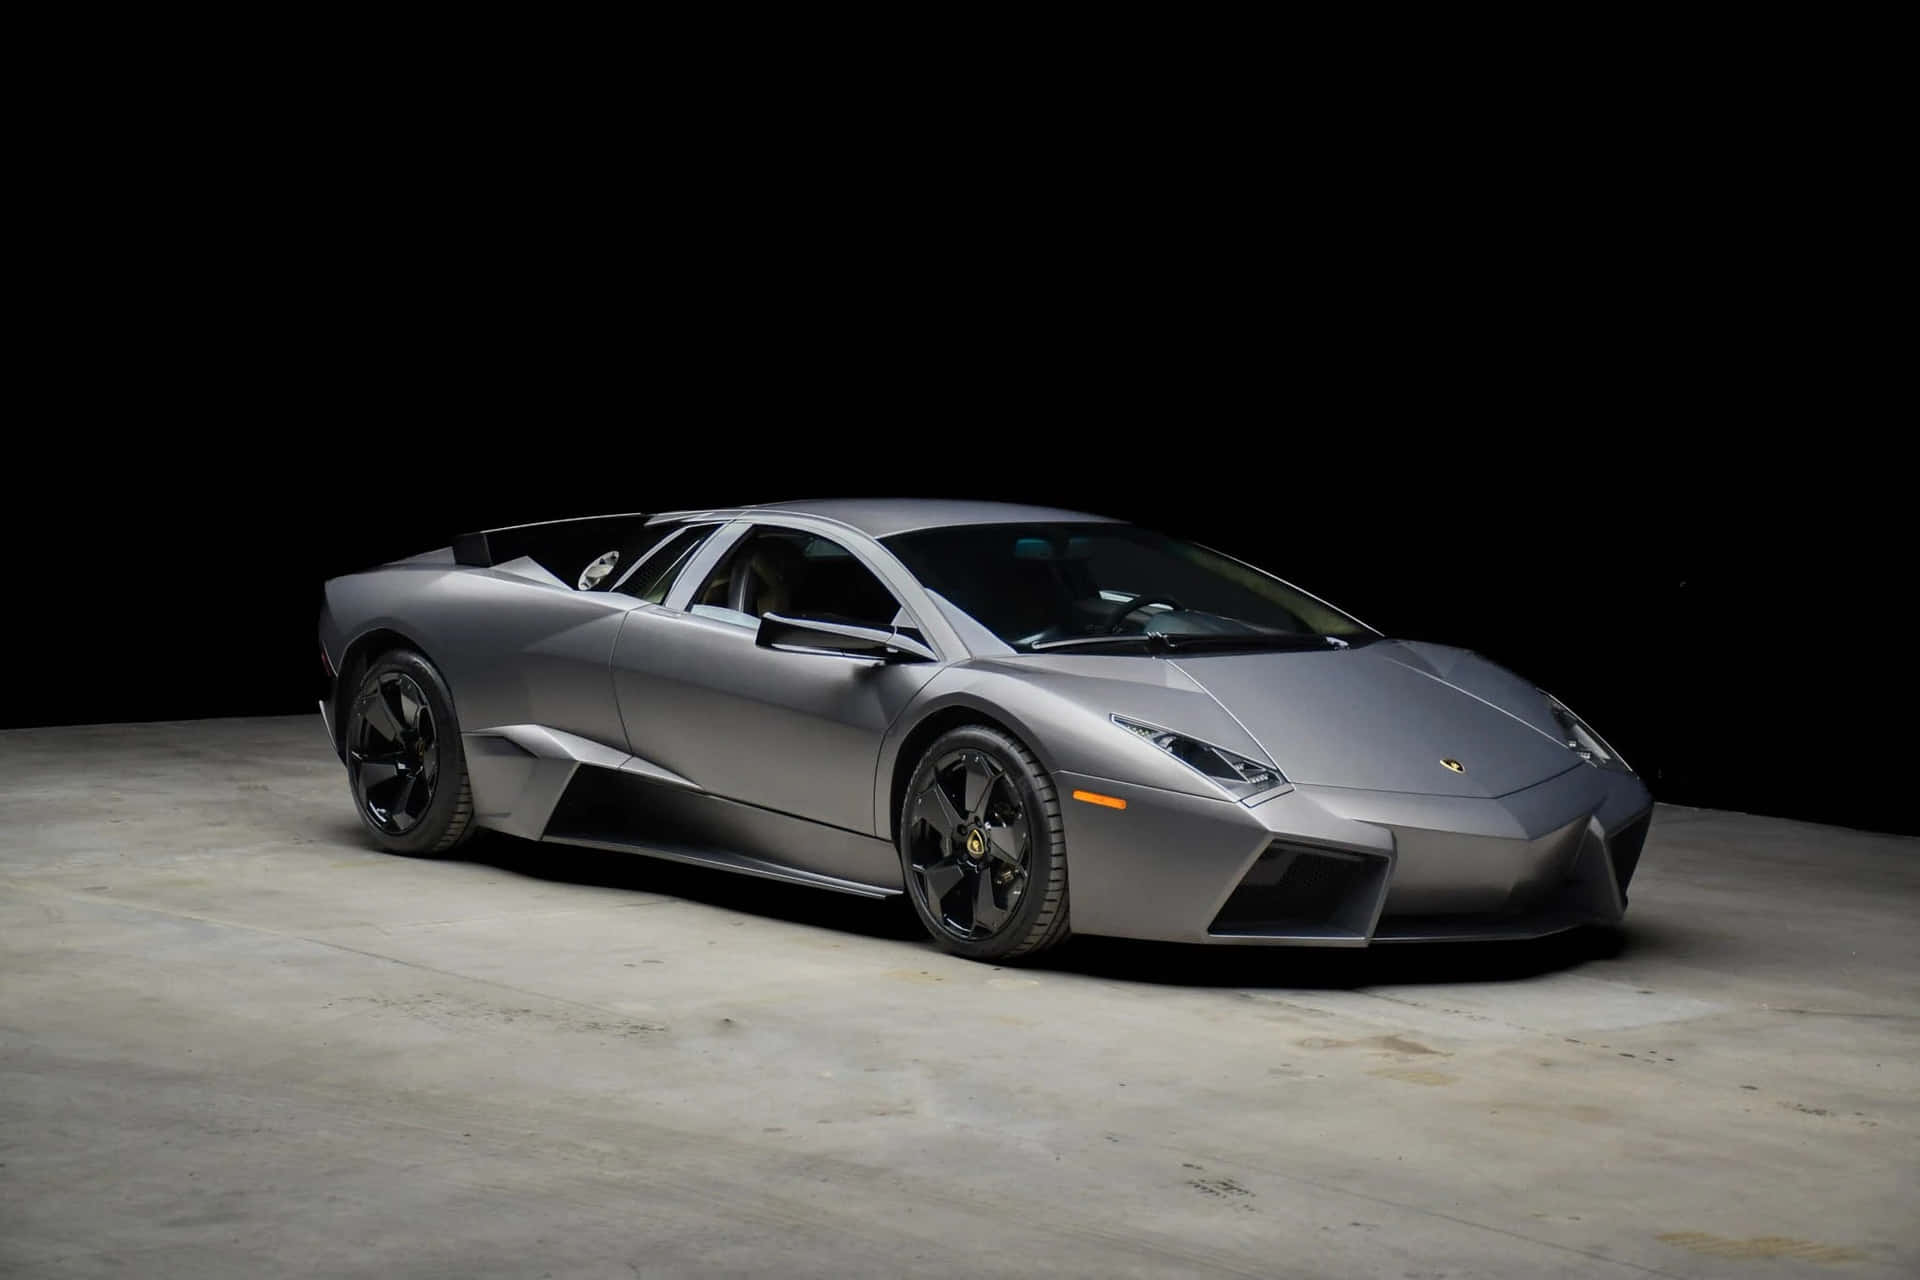 The Sleek and Powerful Lamborghini Reventón Wallpaper